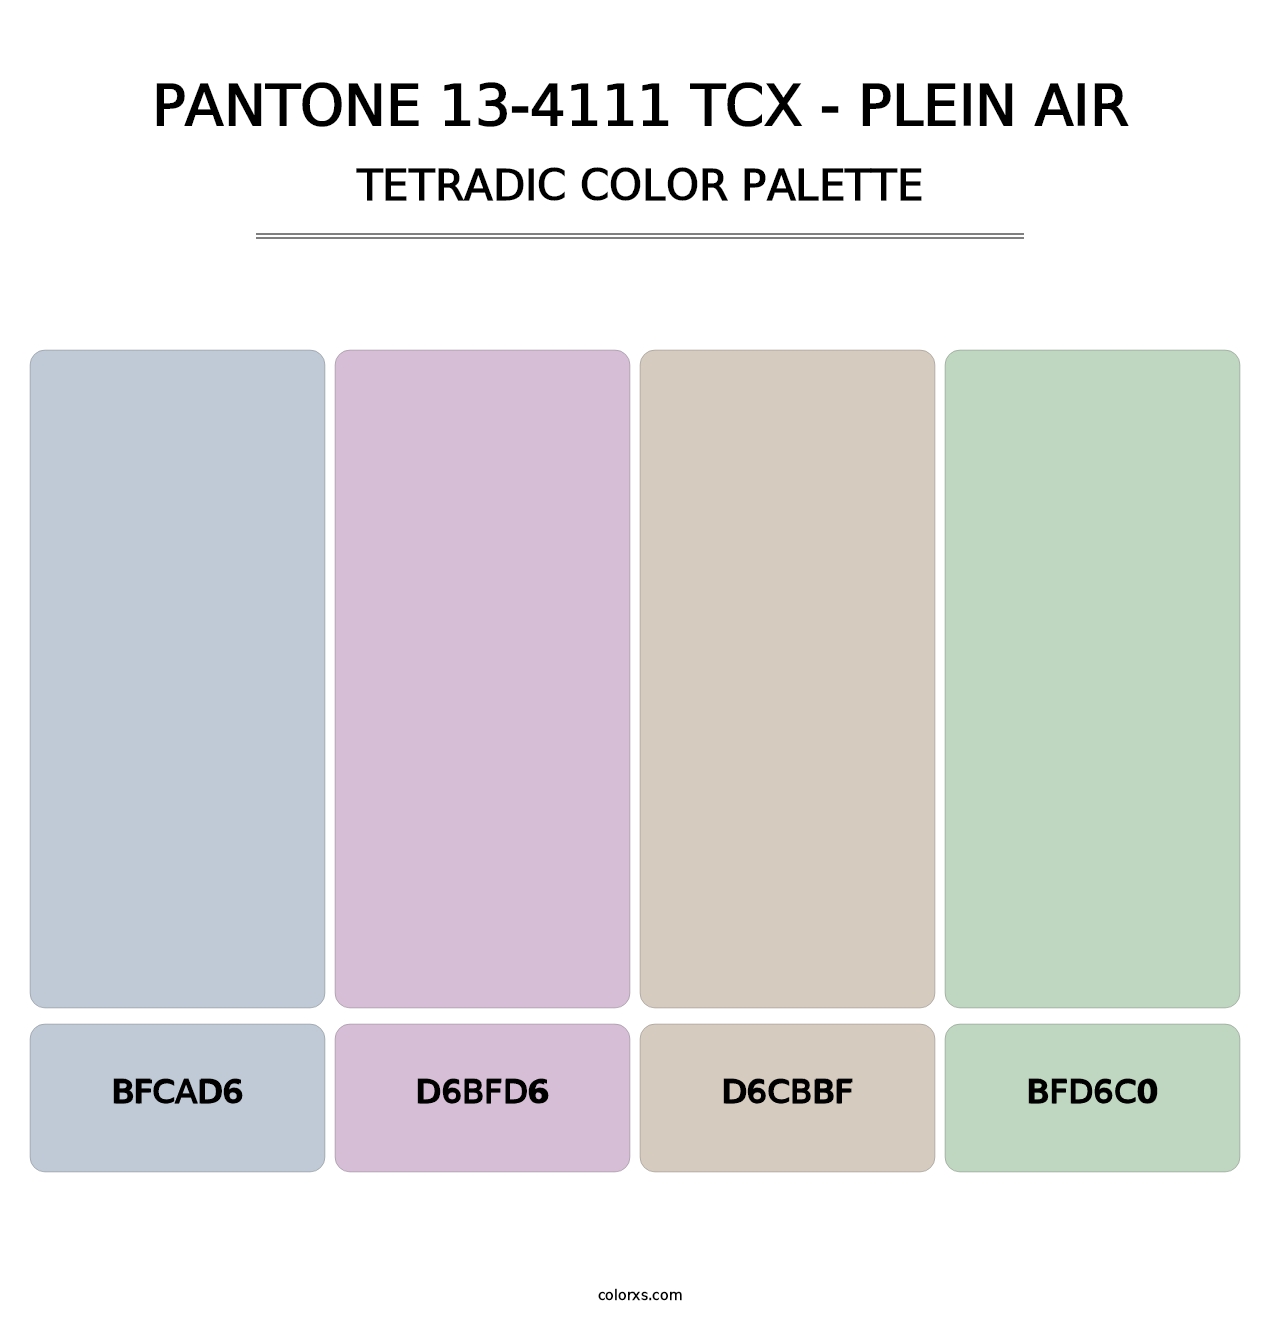 PANTONE 13-4111 TCX - Plein Air - Tetradic Color Palette